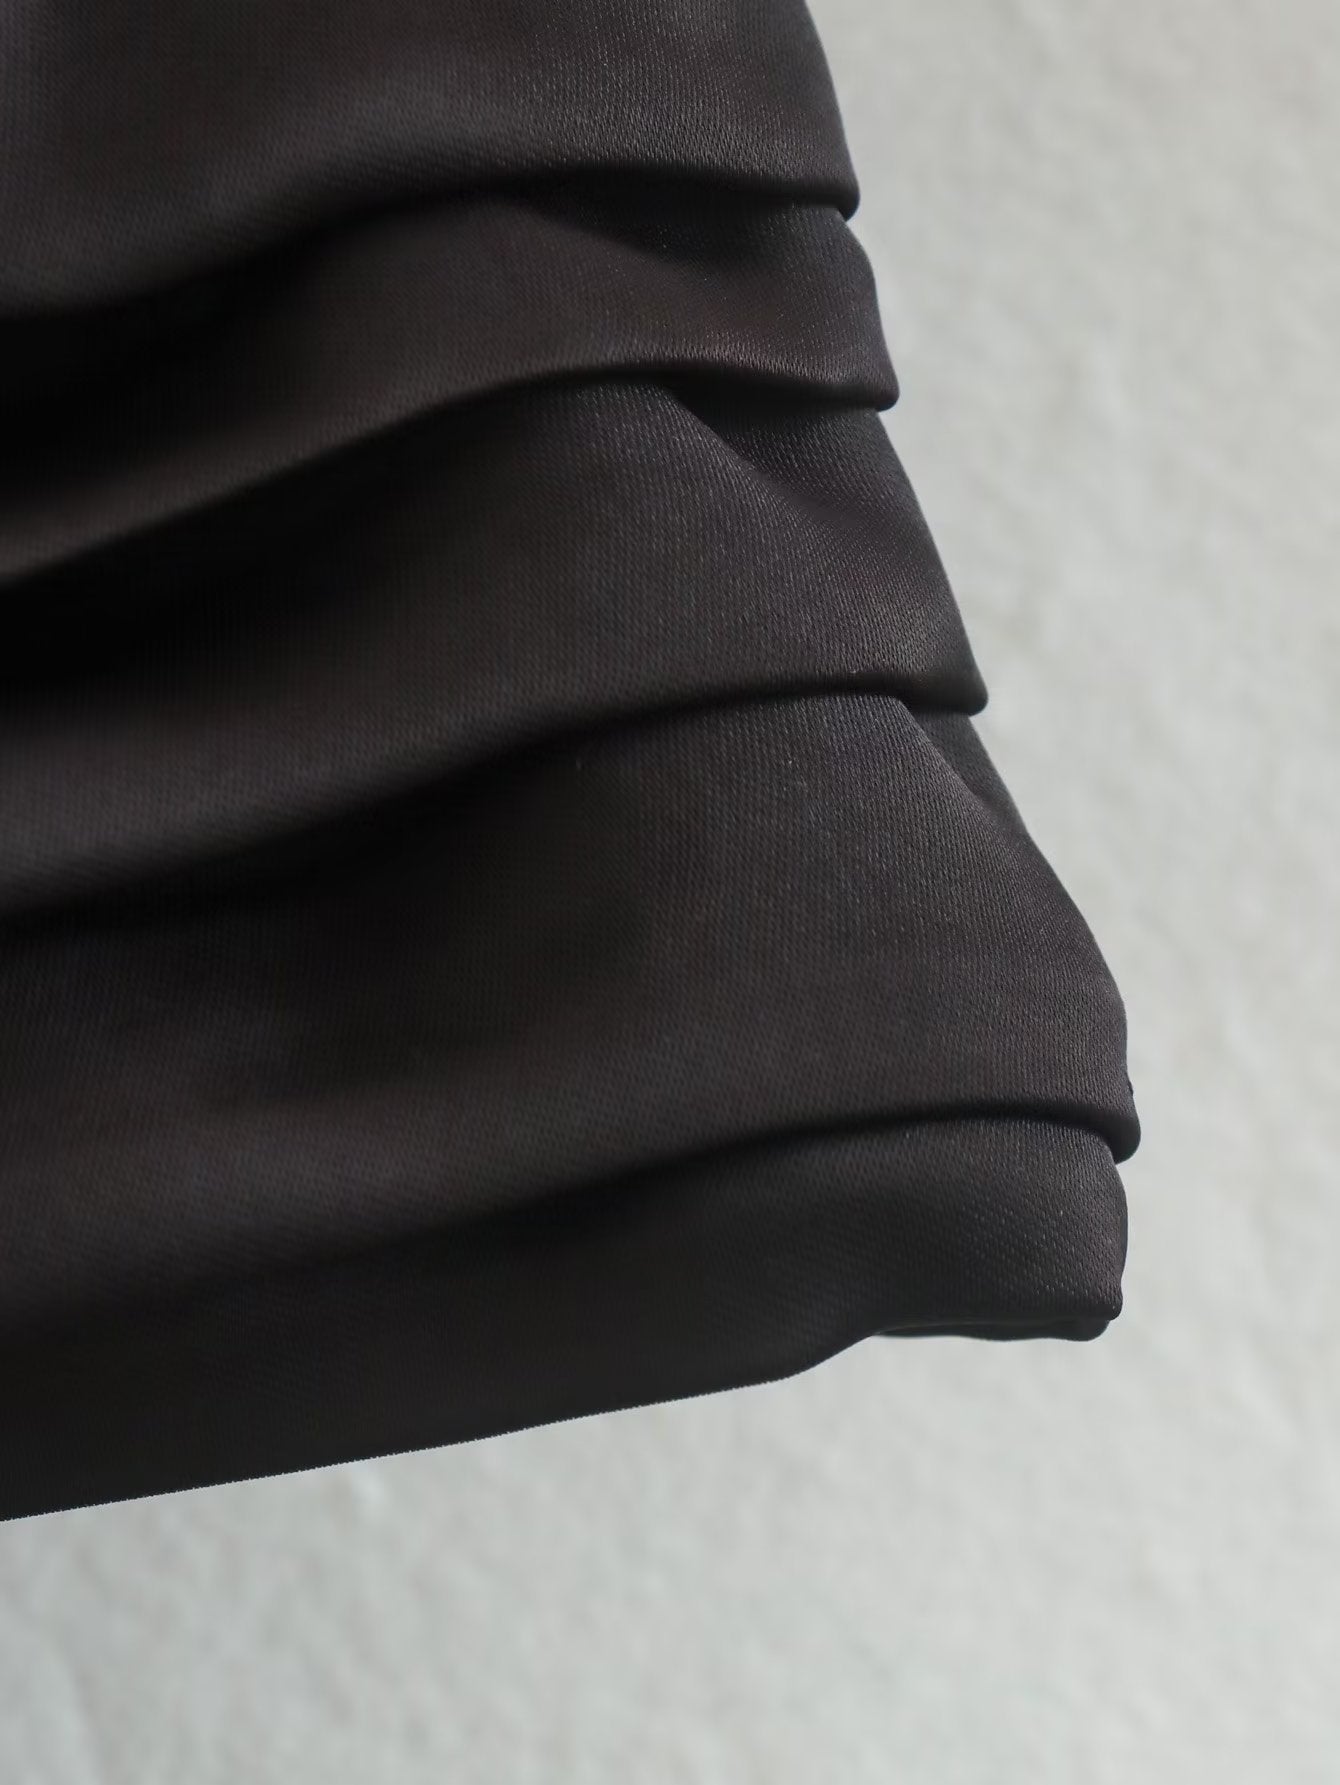 Black Satin Summer Short Blouses for Women-Shirts & Tops-Free Shipping at meselling99